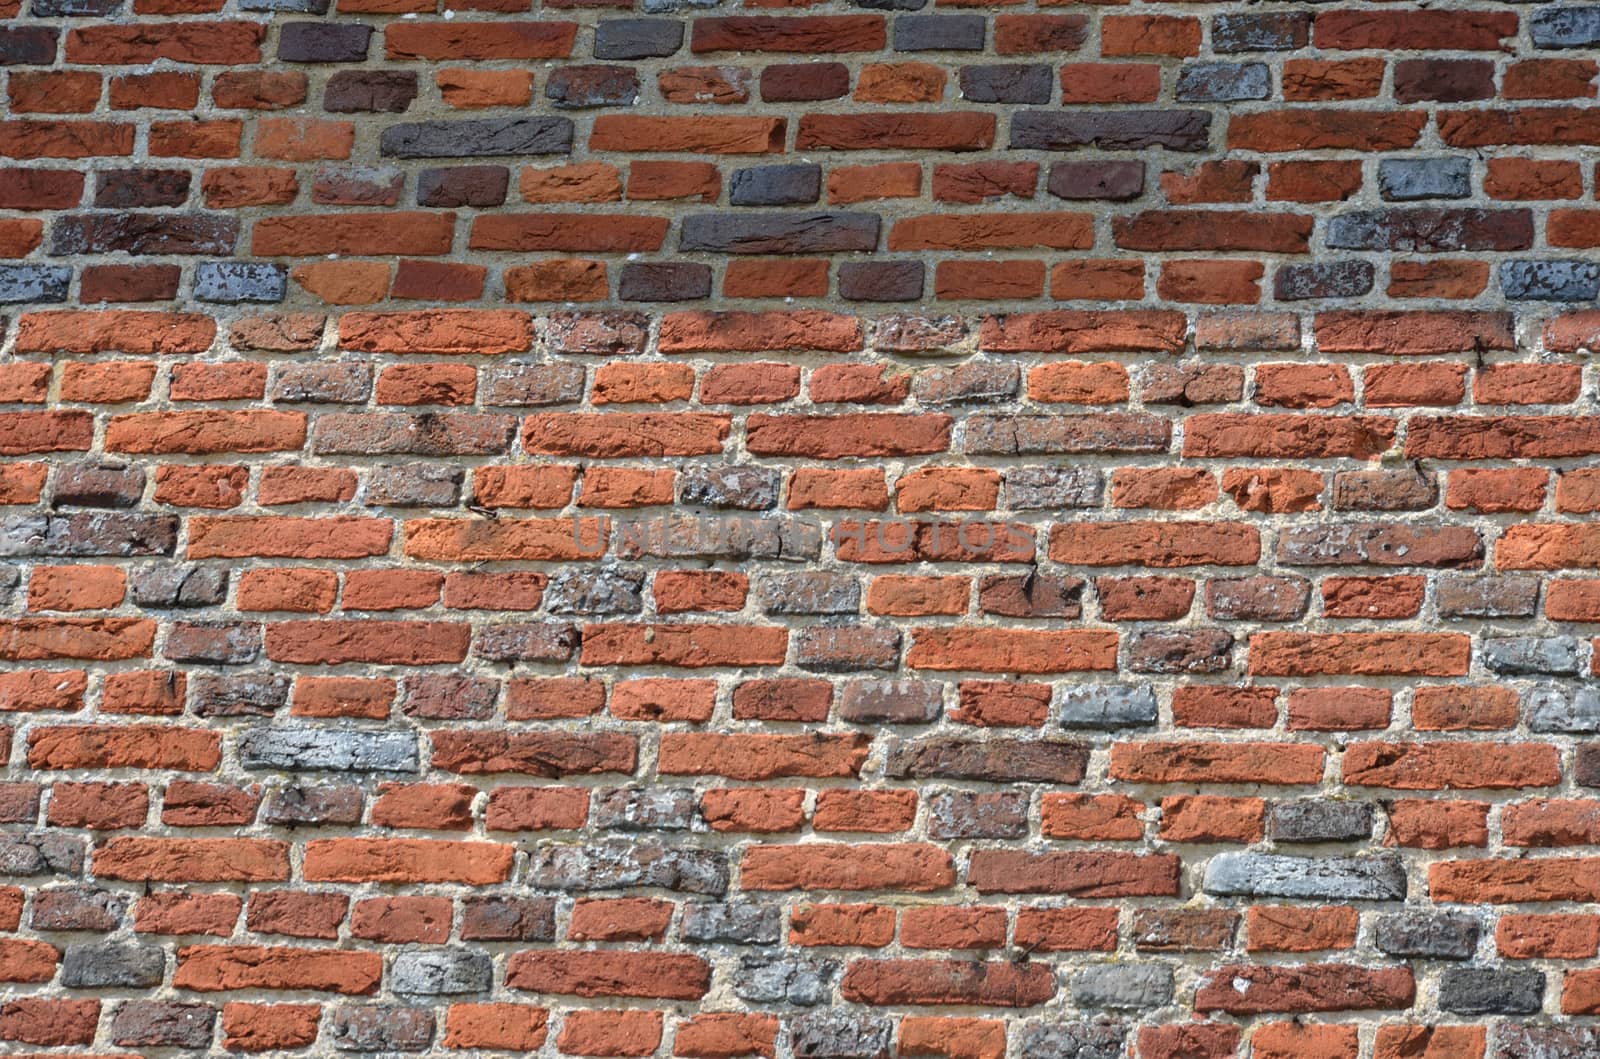 Brick Wall with pattern